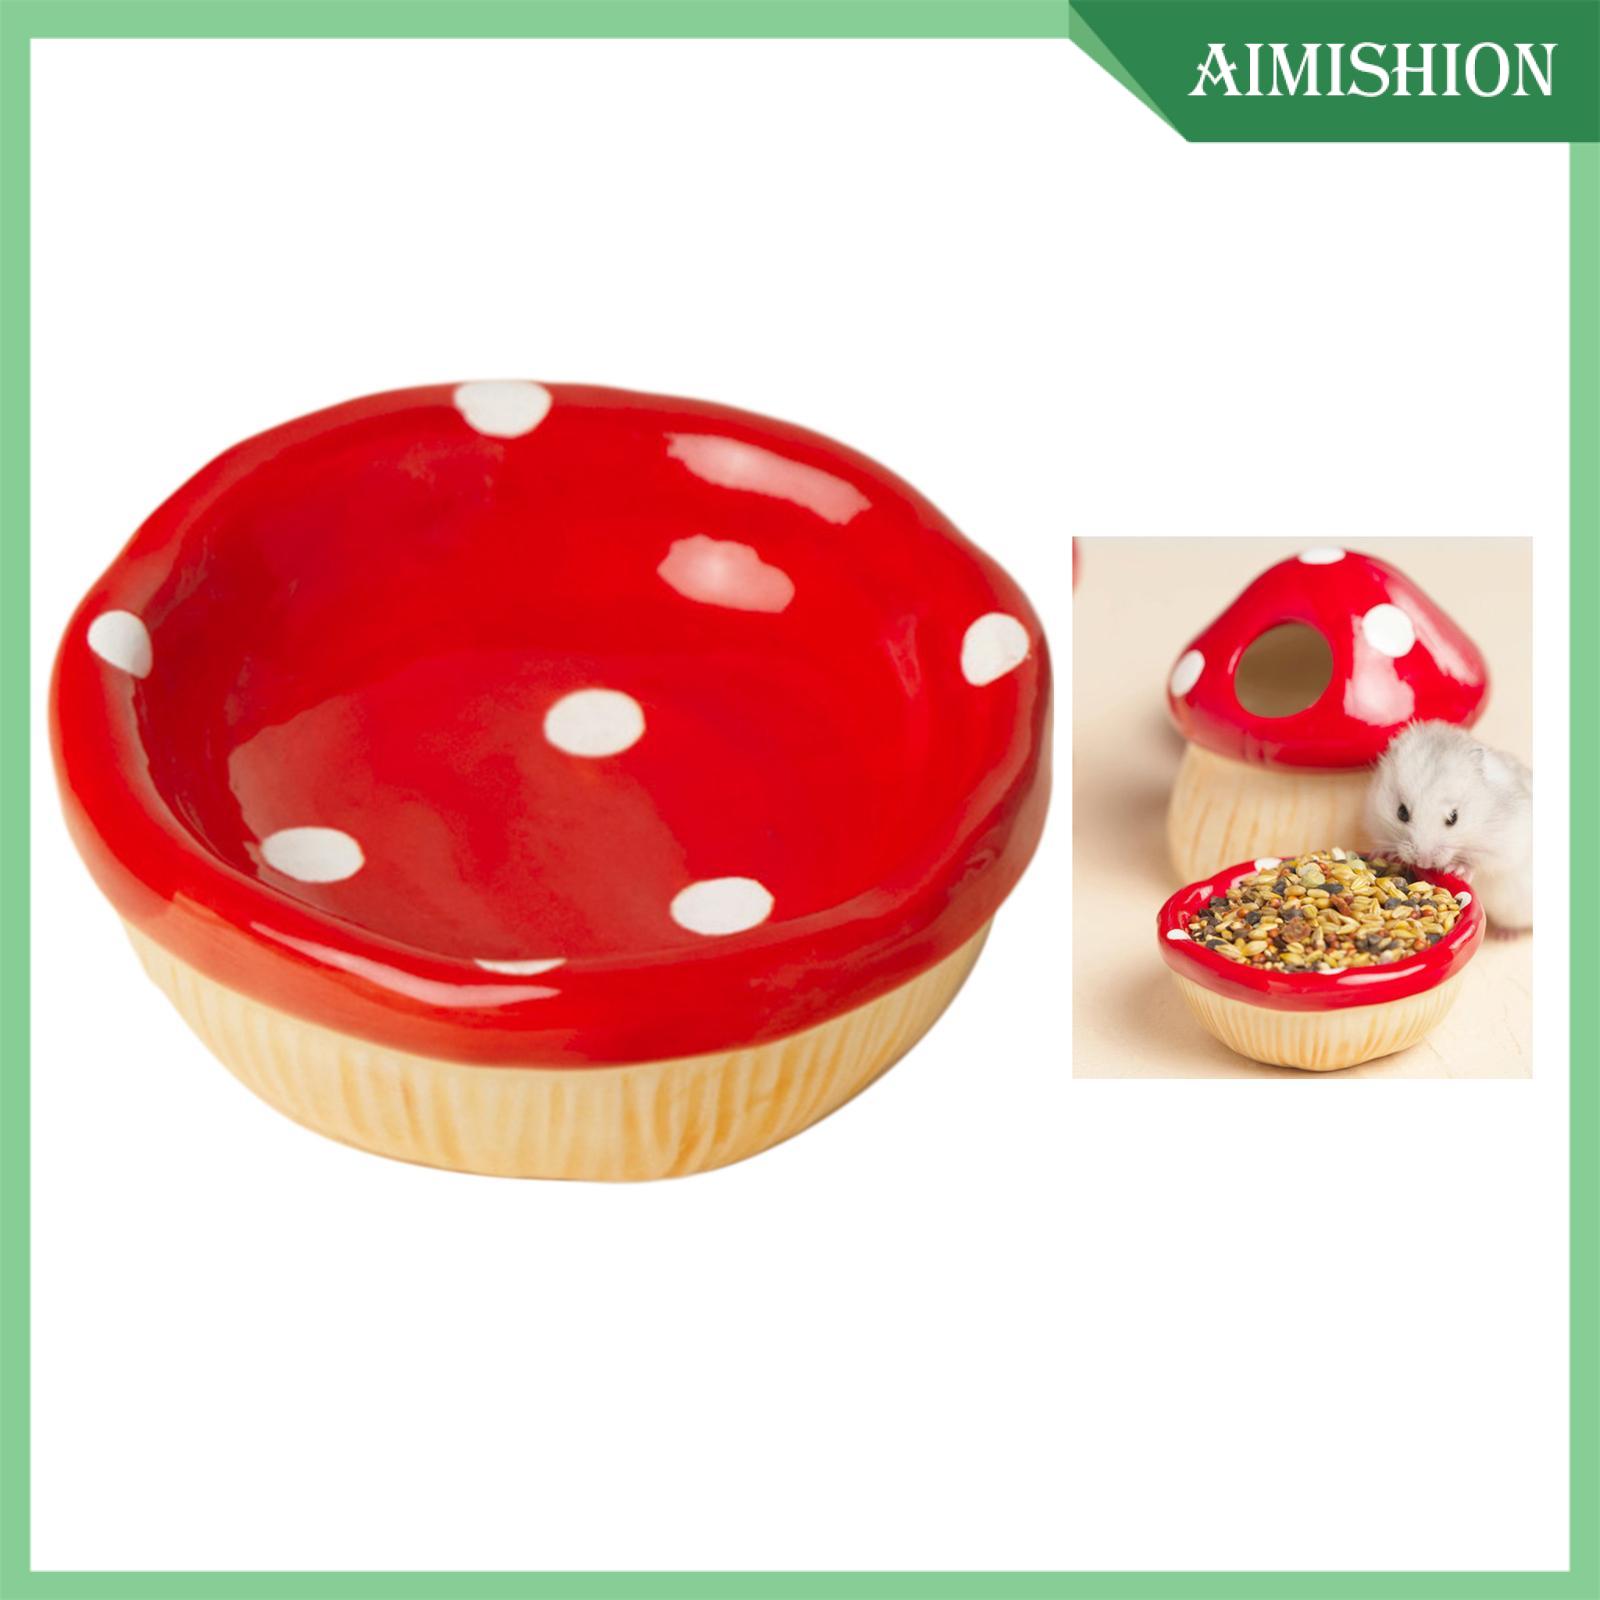 Aimishion Ceramic Hamster Food Bowl for Small Animals Dwarf Hamster